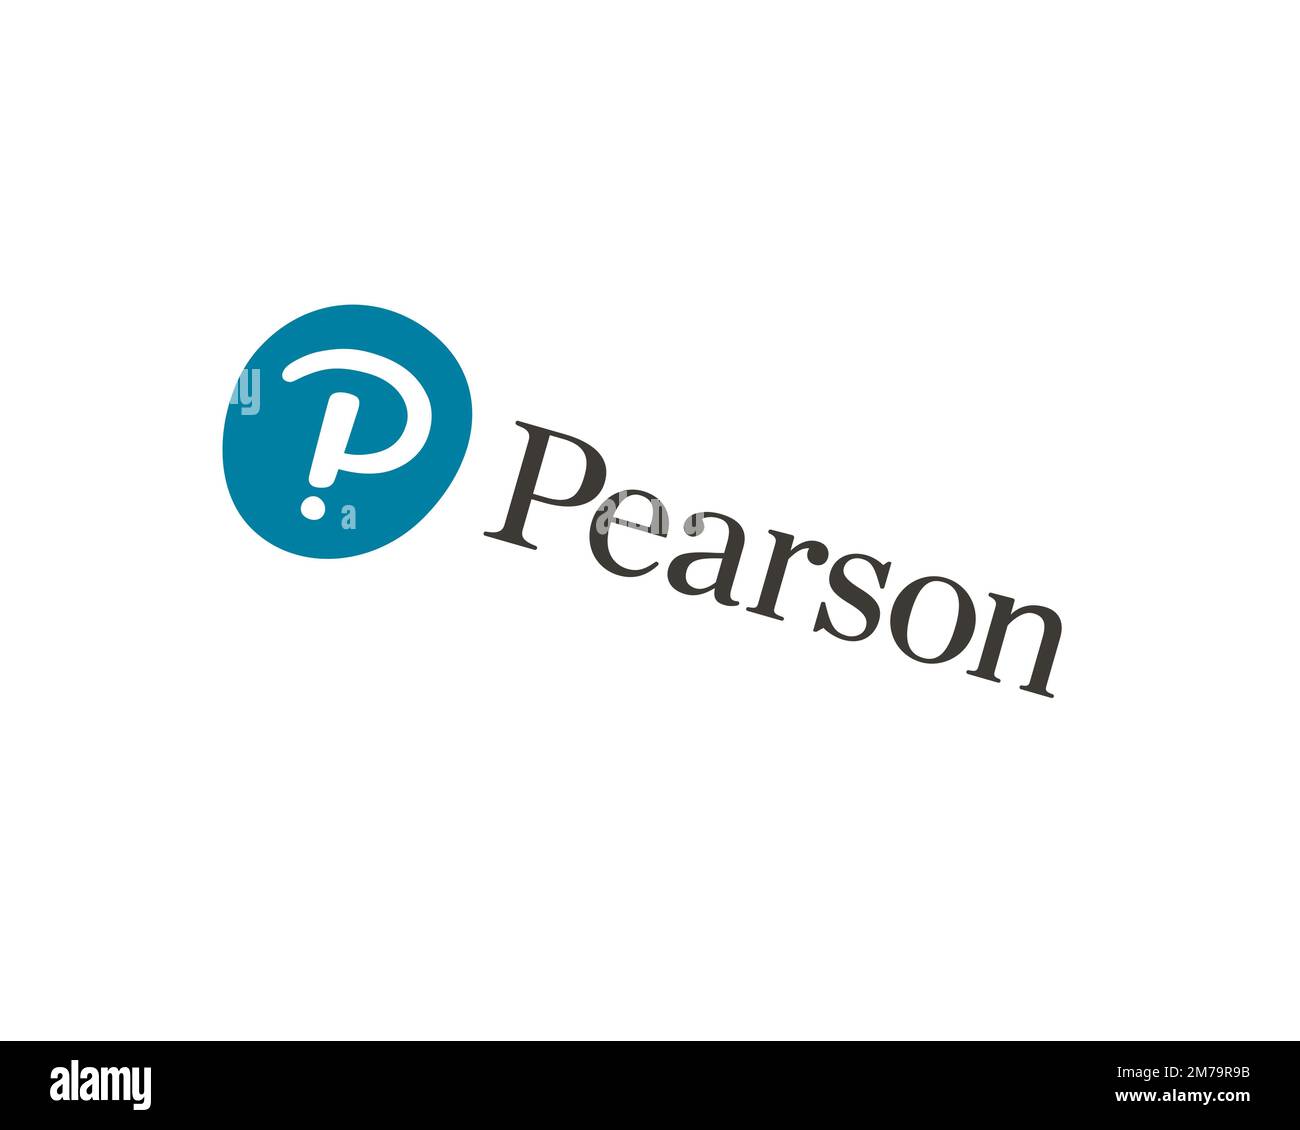 Pearson plc, logo ruotato, sfondo bianco B Foto Stock